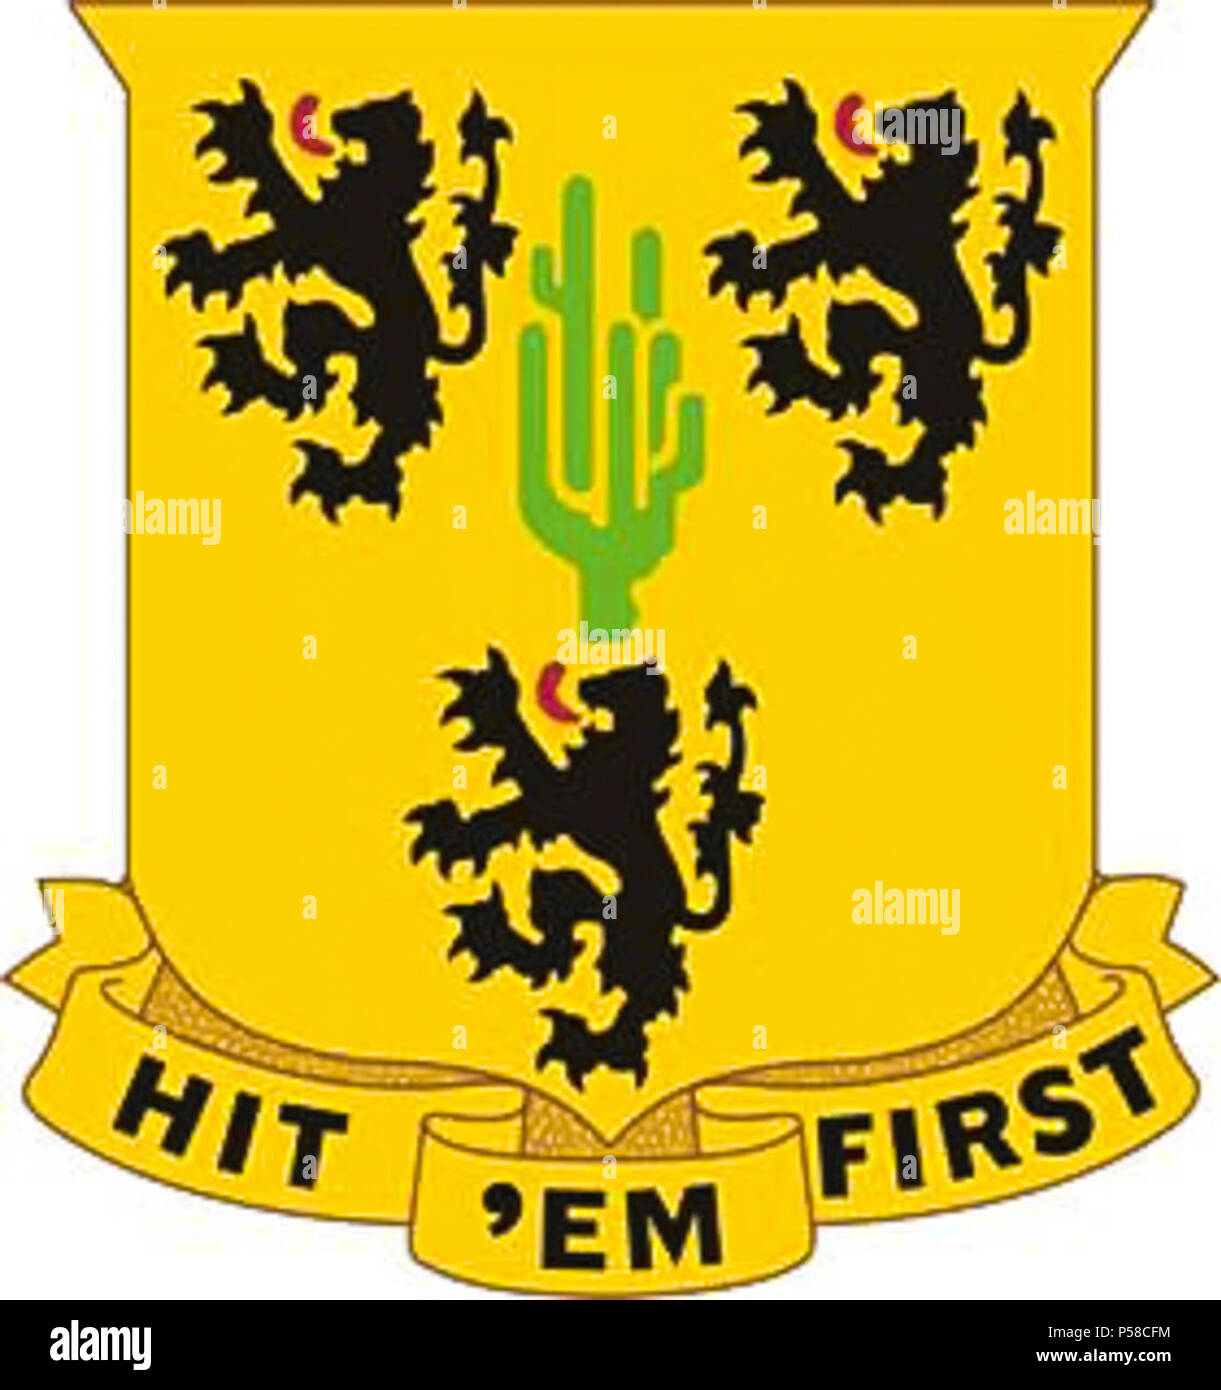 181st Field Artillery Regiment Unit Insignia. Stock Photo